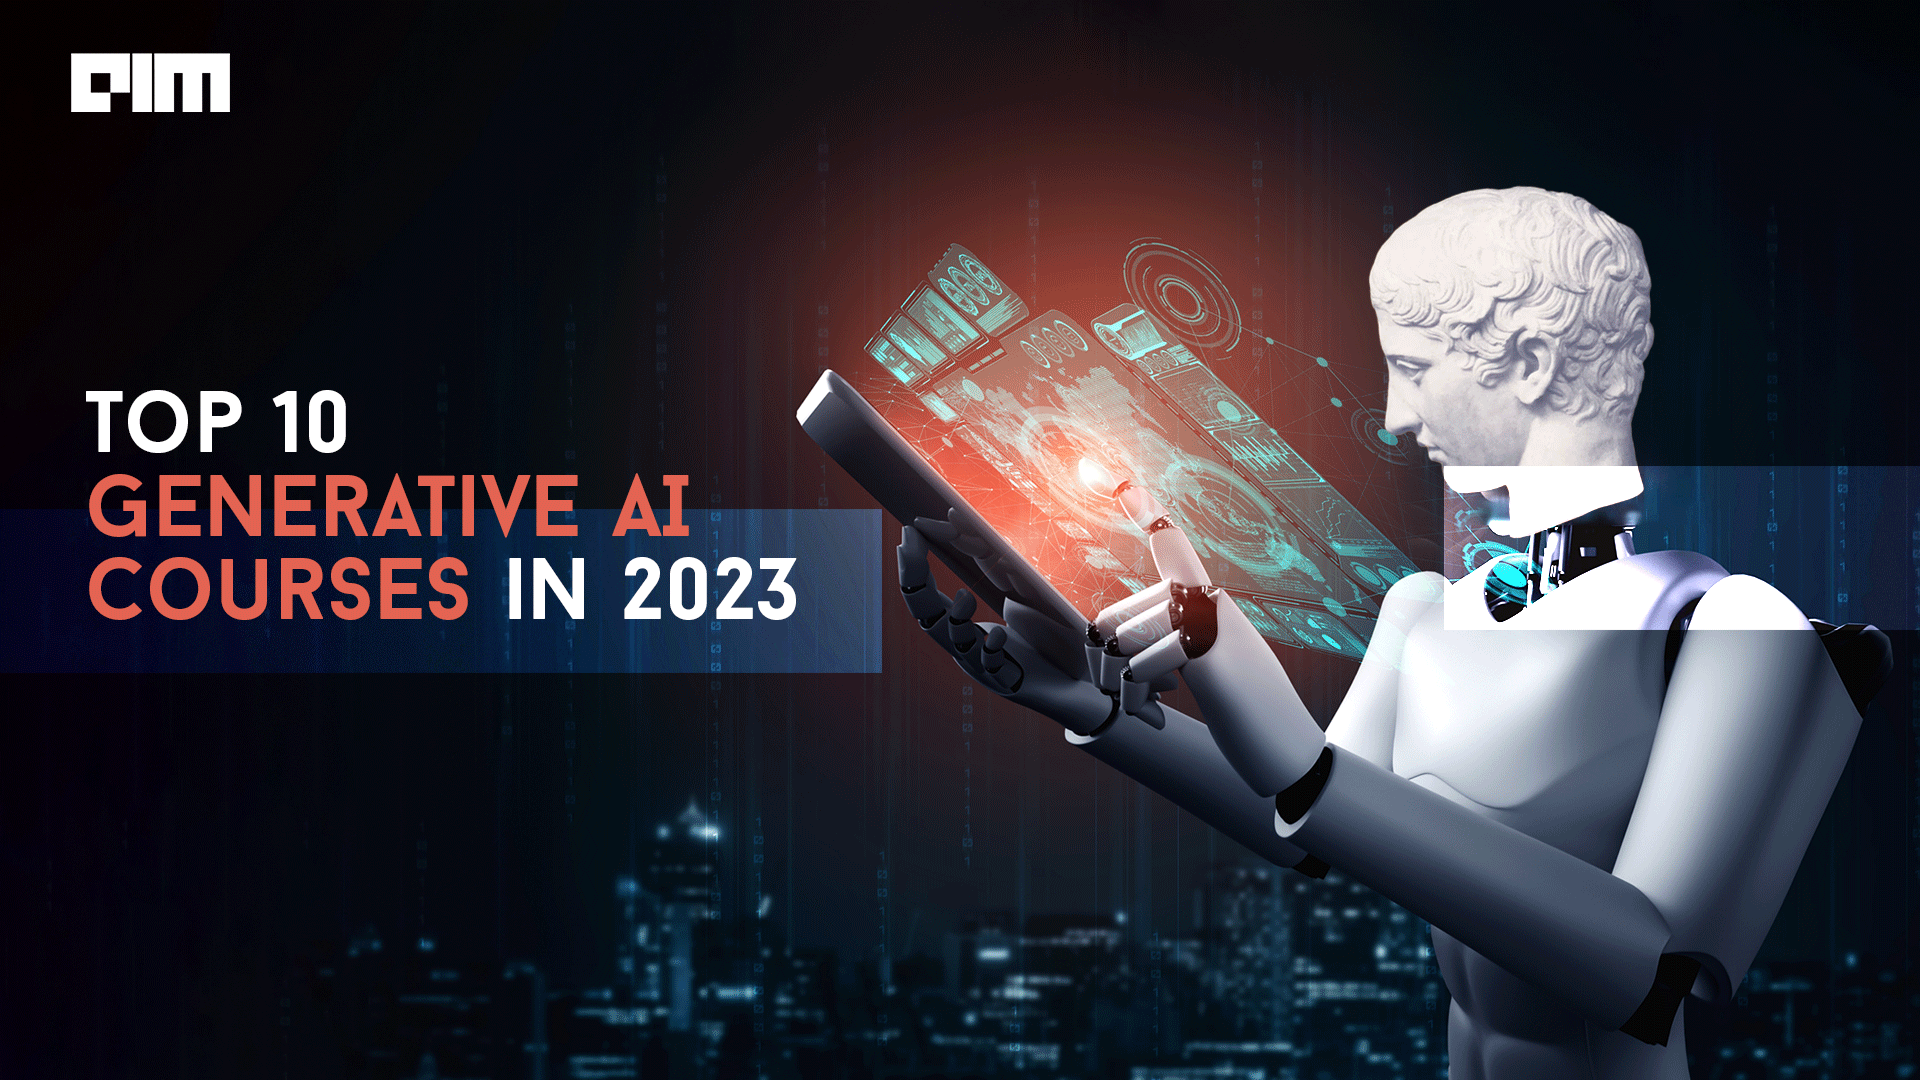 Top 10 Generative AI Courses in 2023